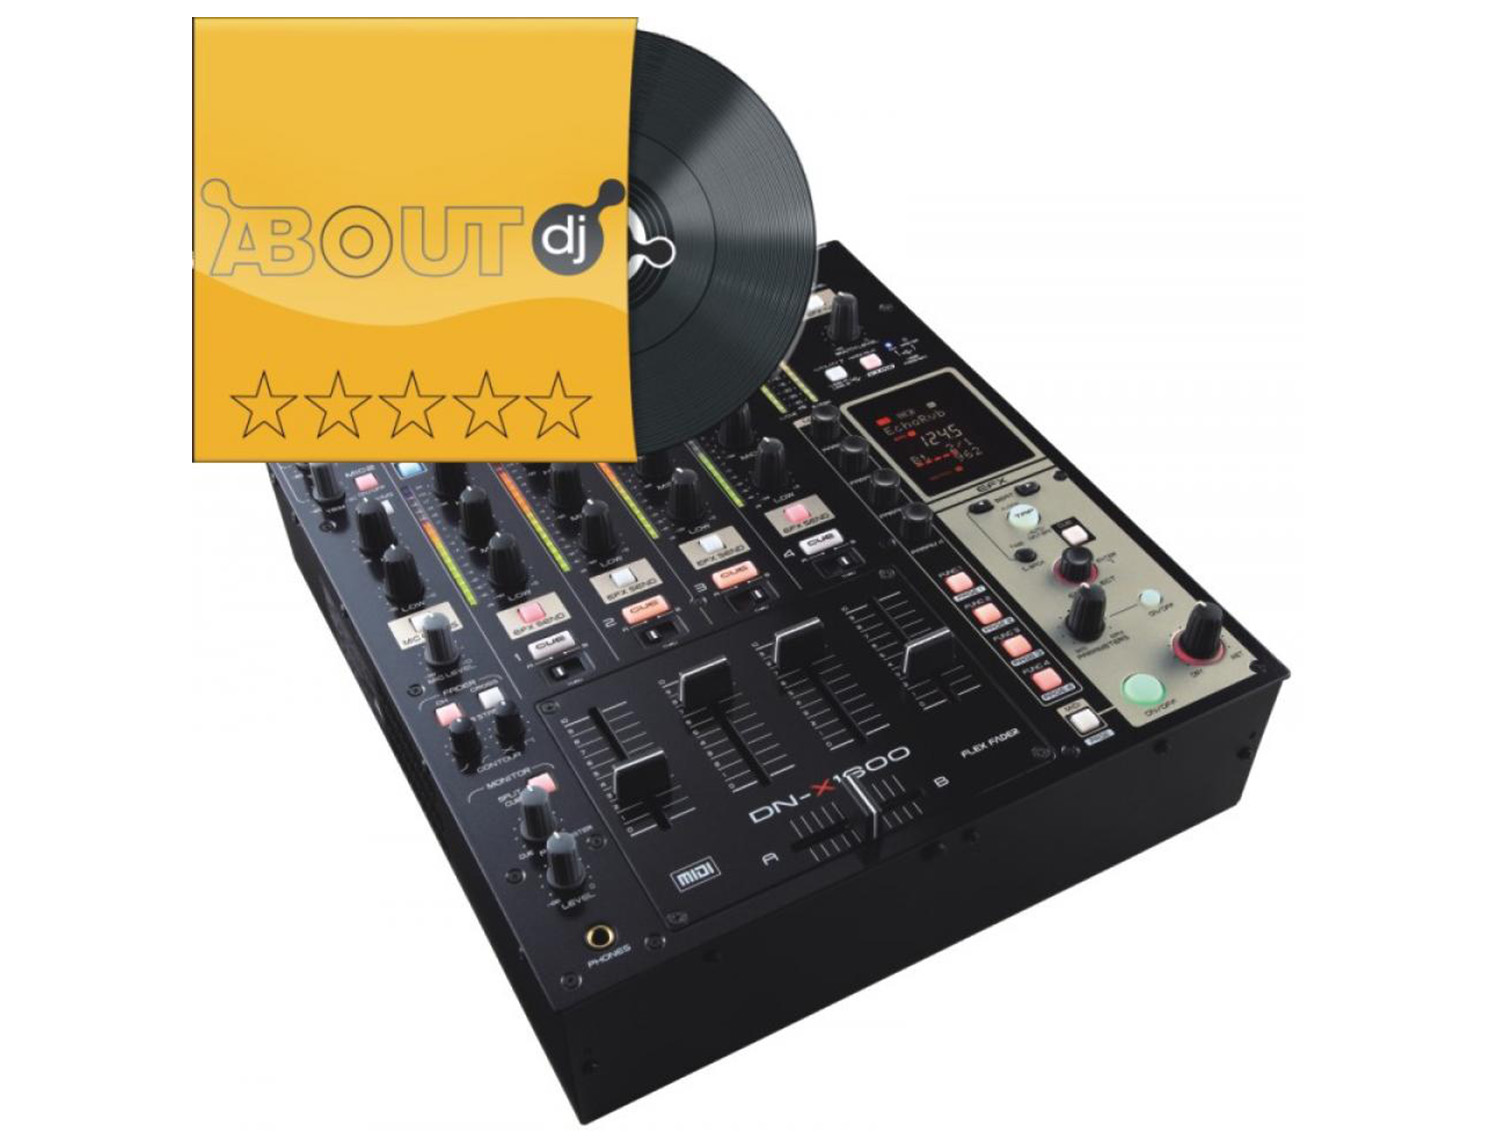 DN-X1600 - 调音台- DENON DJ - 品牌分类- 品牌中心- Ezpro